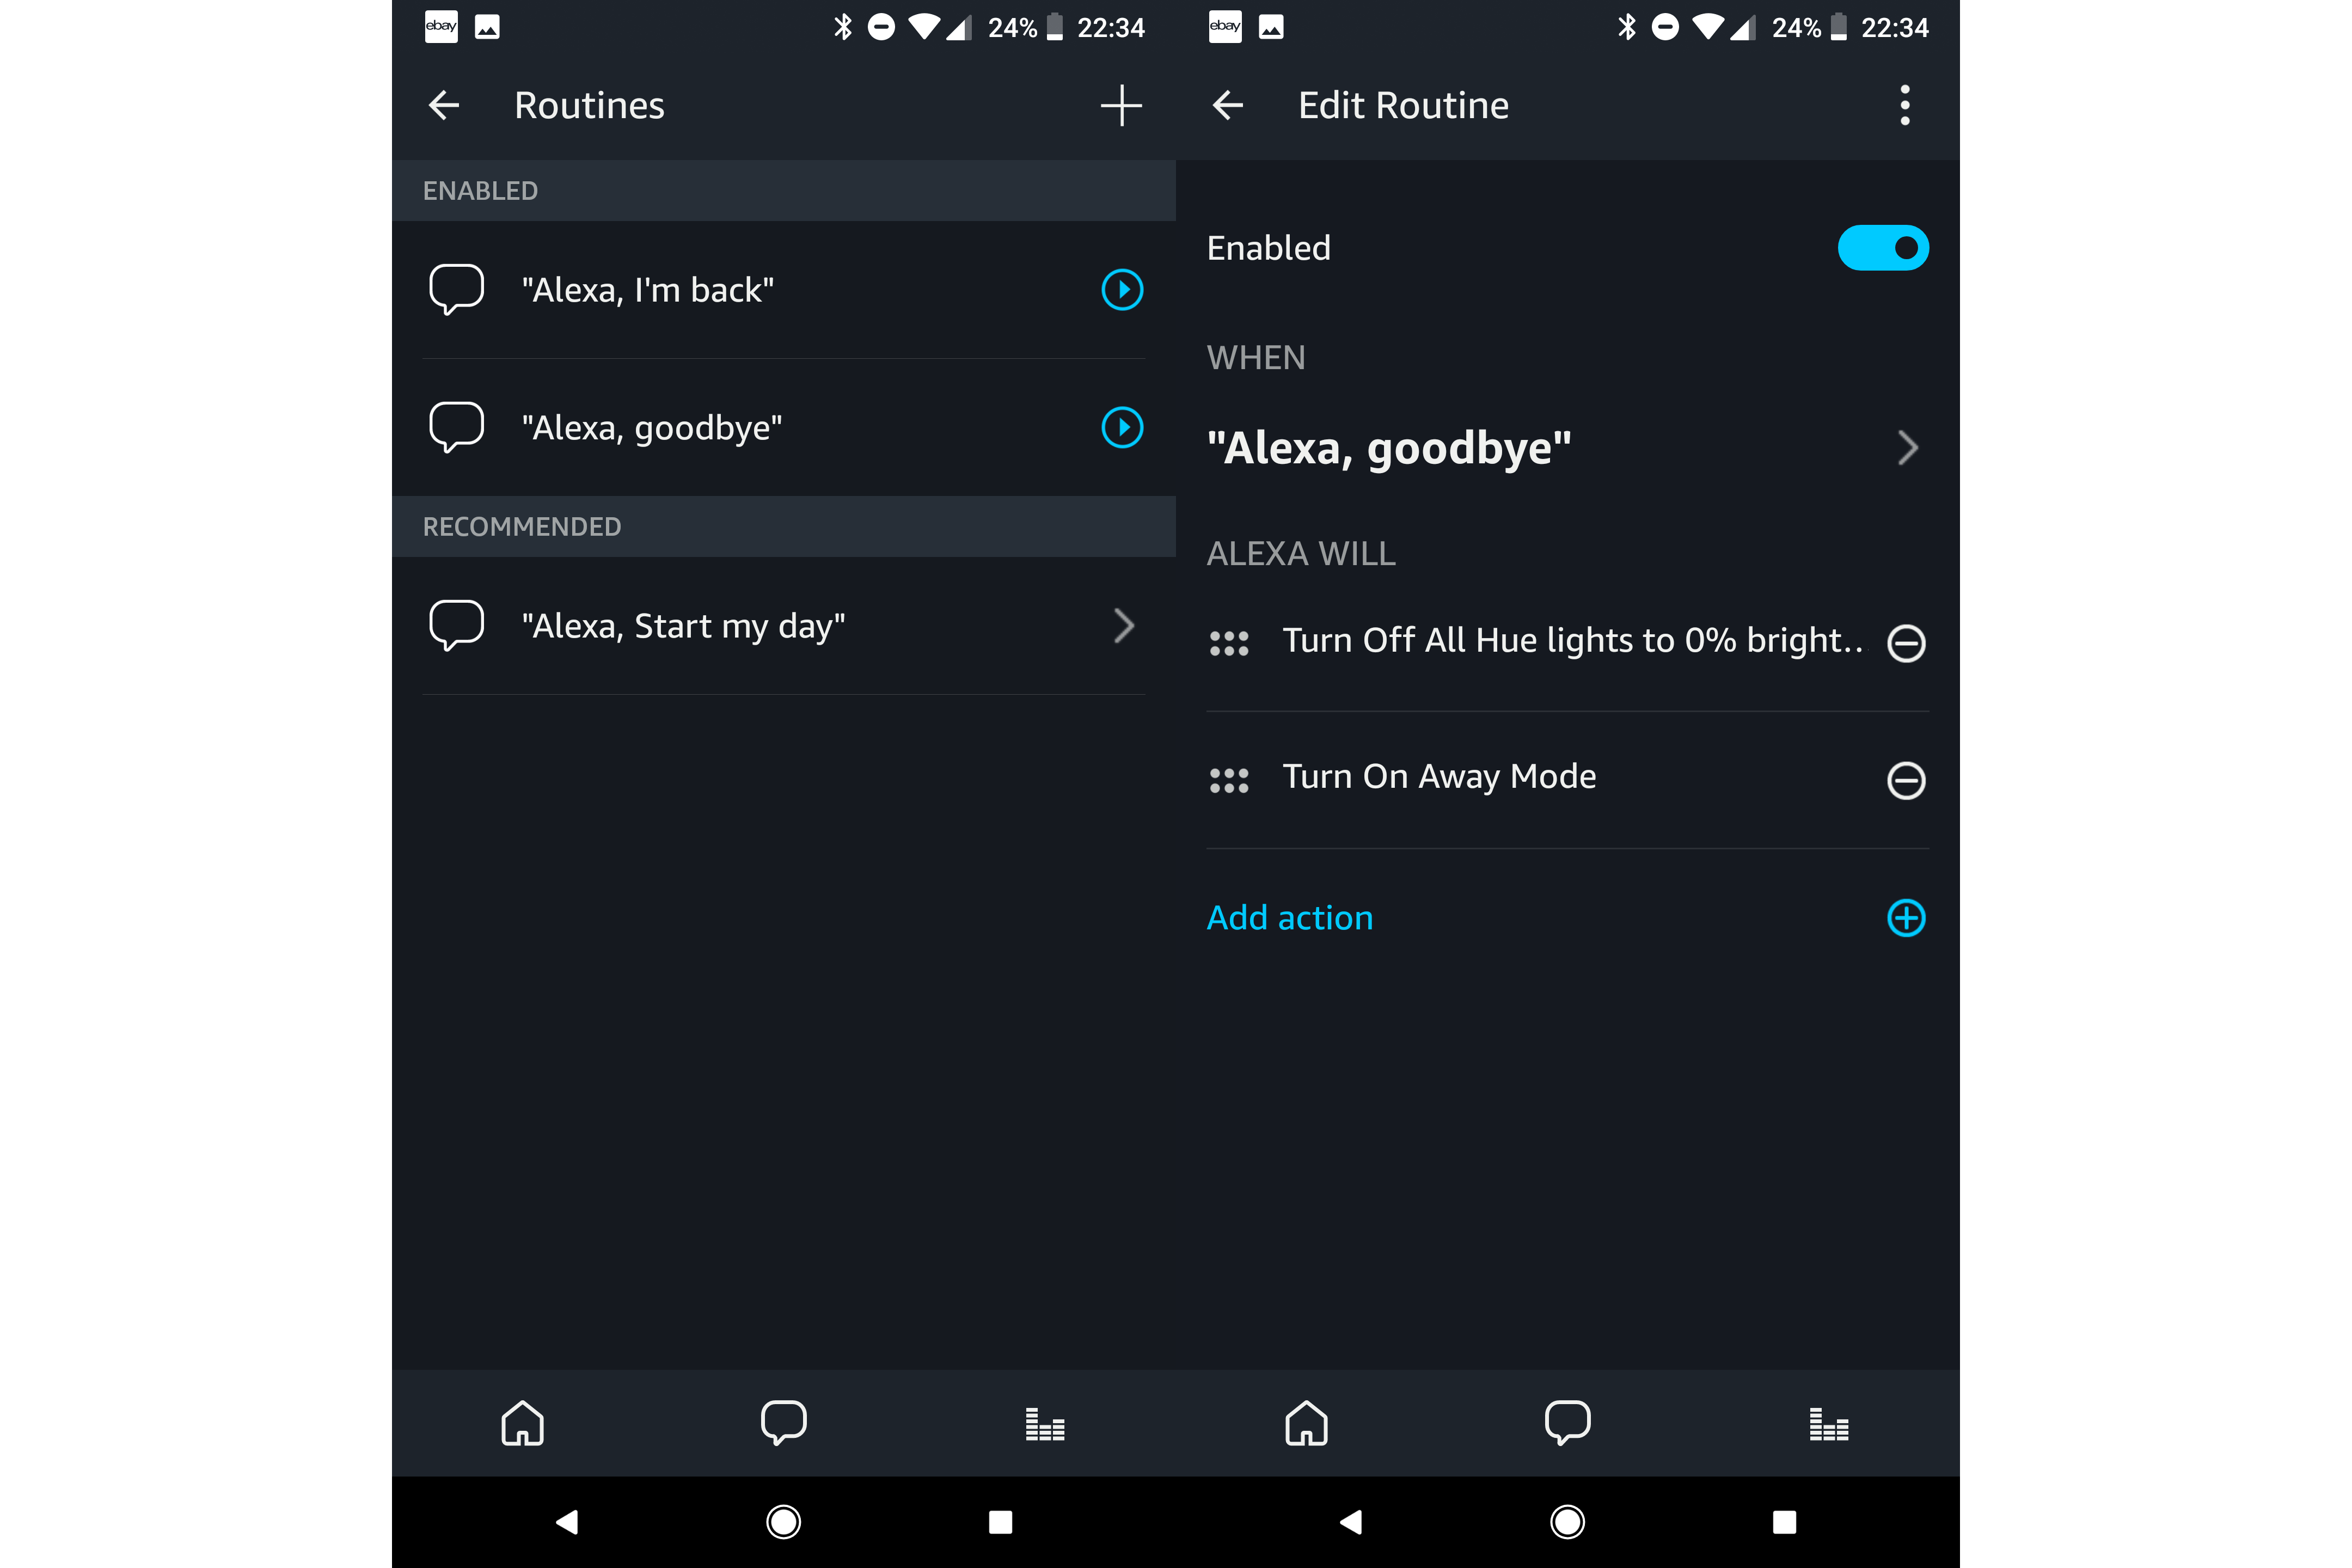 Amazon Echo app interface showing Alexa routines setup.